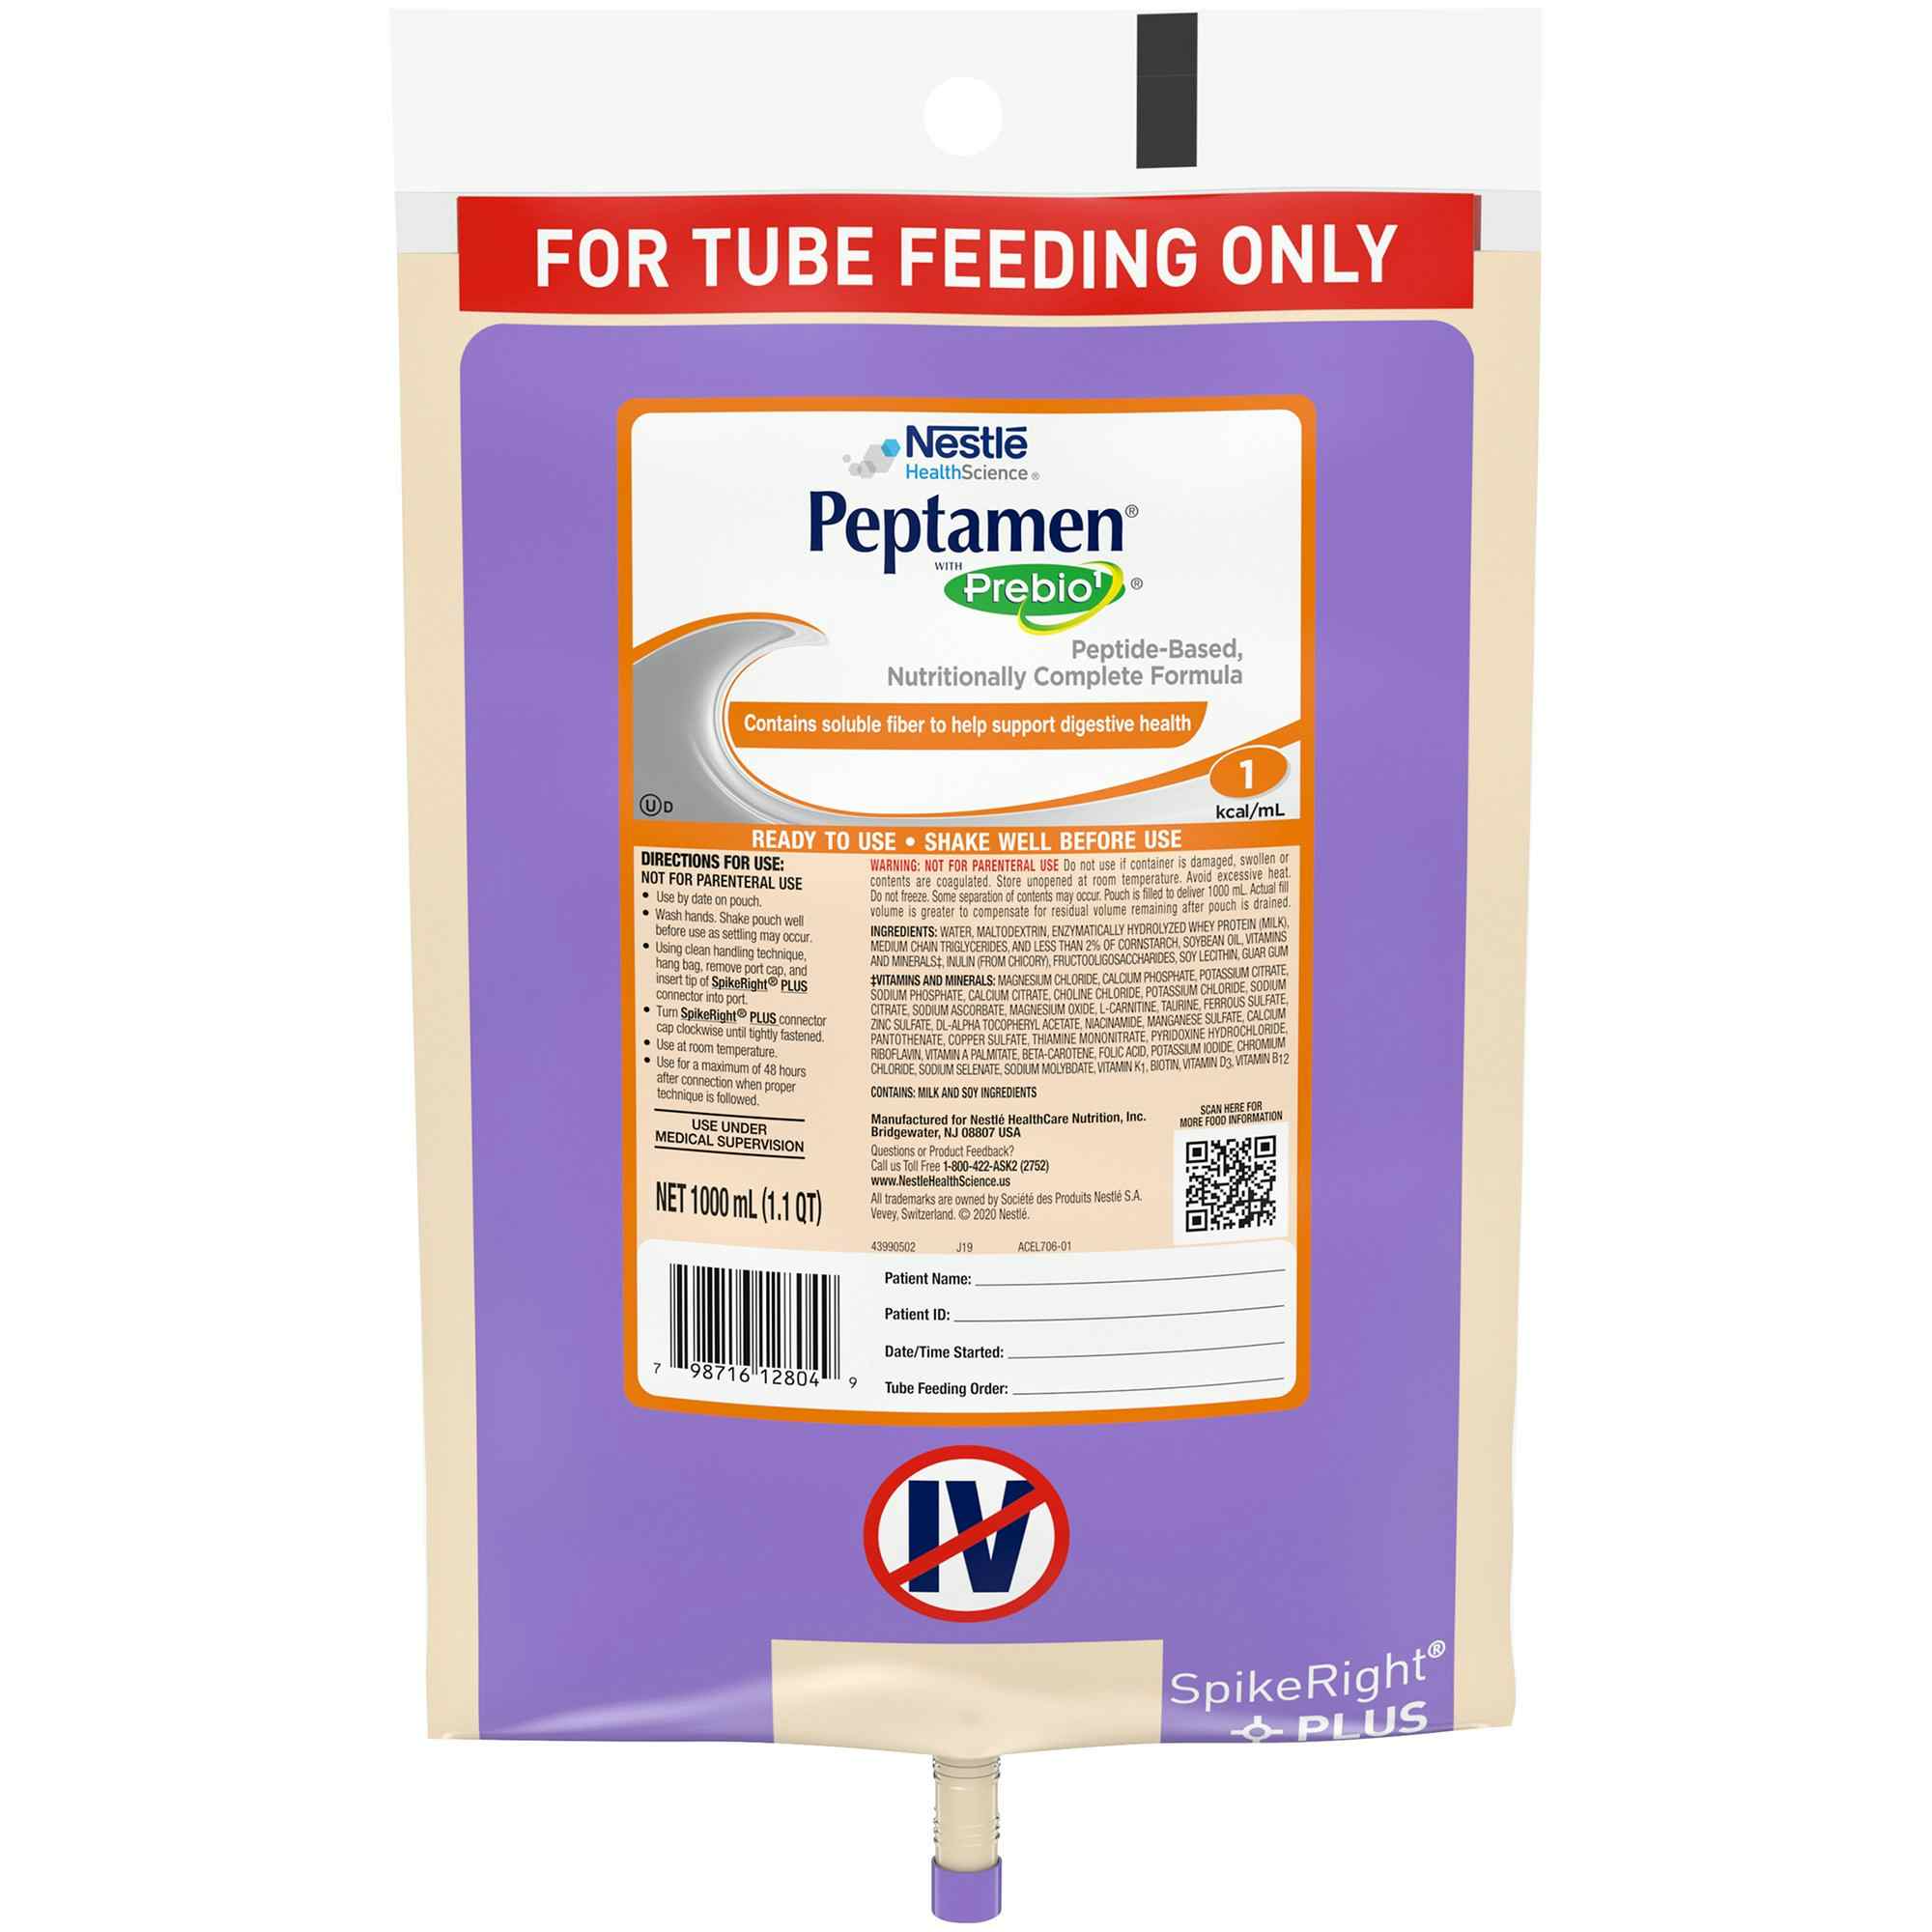 Nestle HealthScience Peptamen with Prebio1 Peptide-Based Nutritionally Complete Tube Feeding Formula, 33.8 oz., 10798716228043, 1 Each